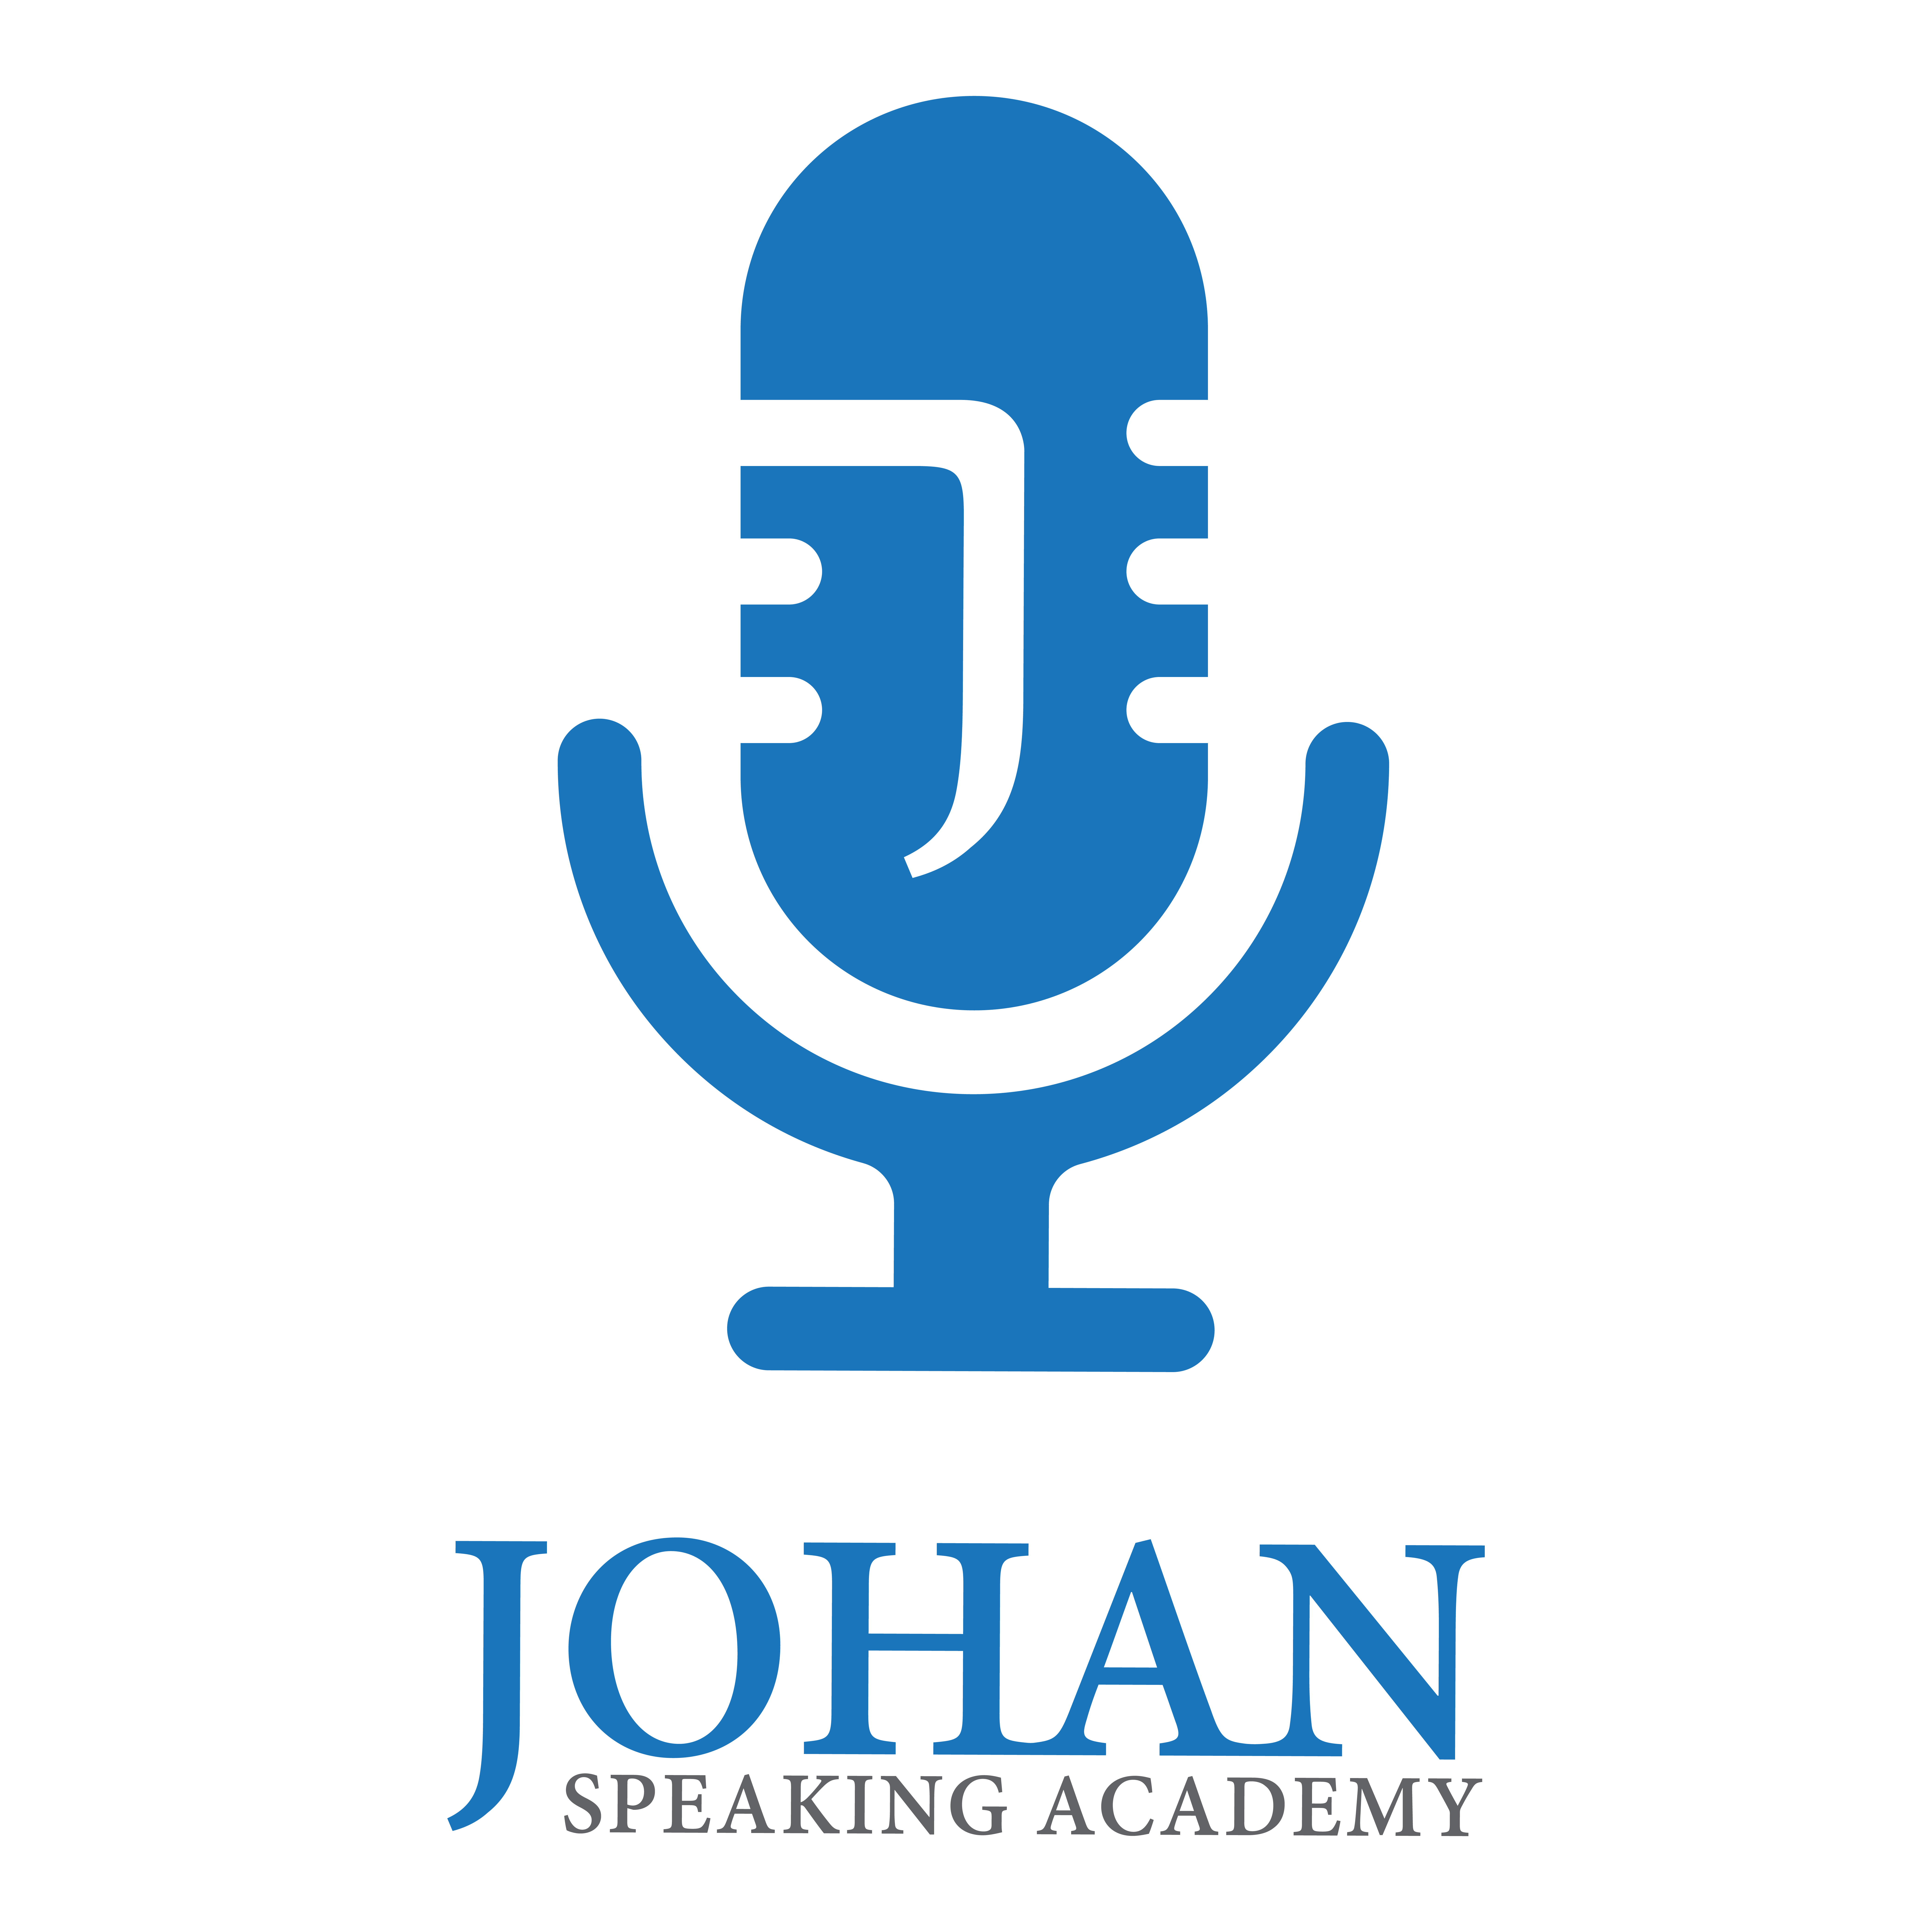 Johan Speaking Academy